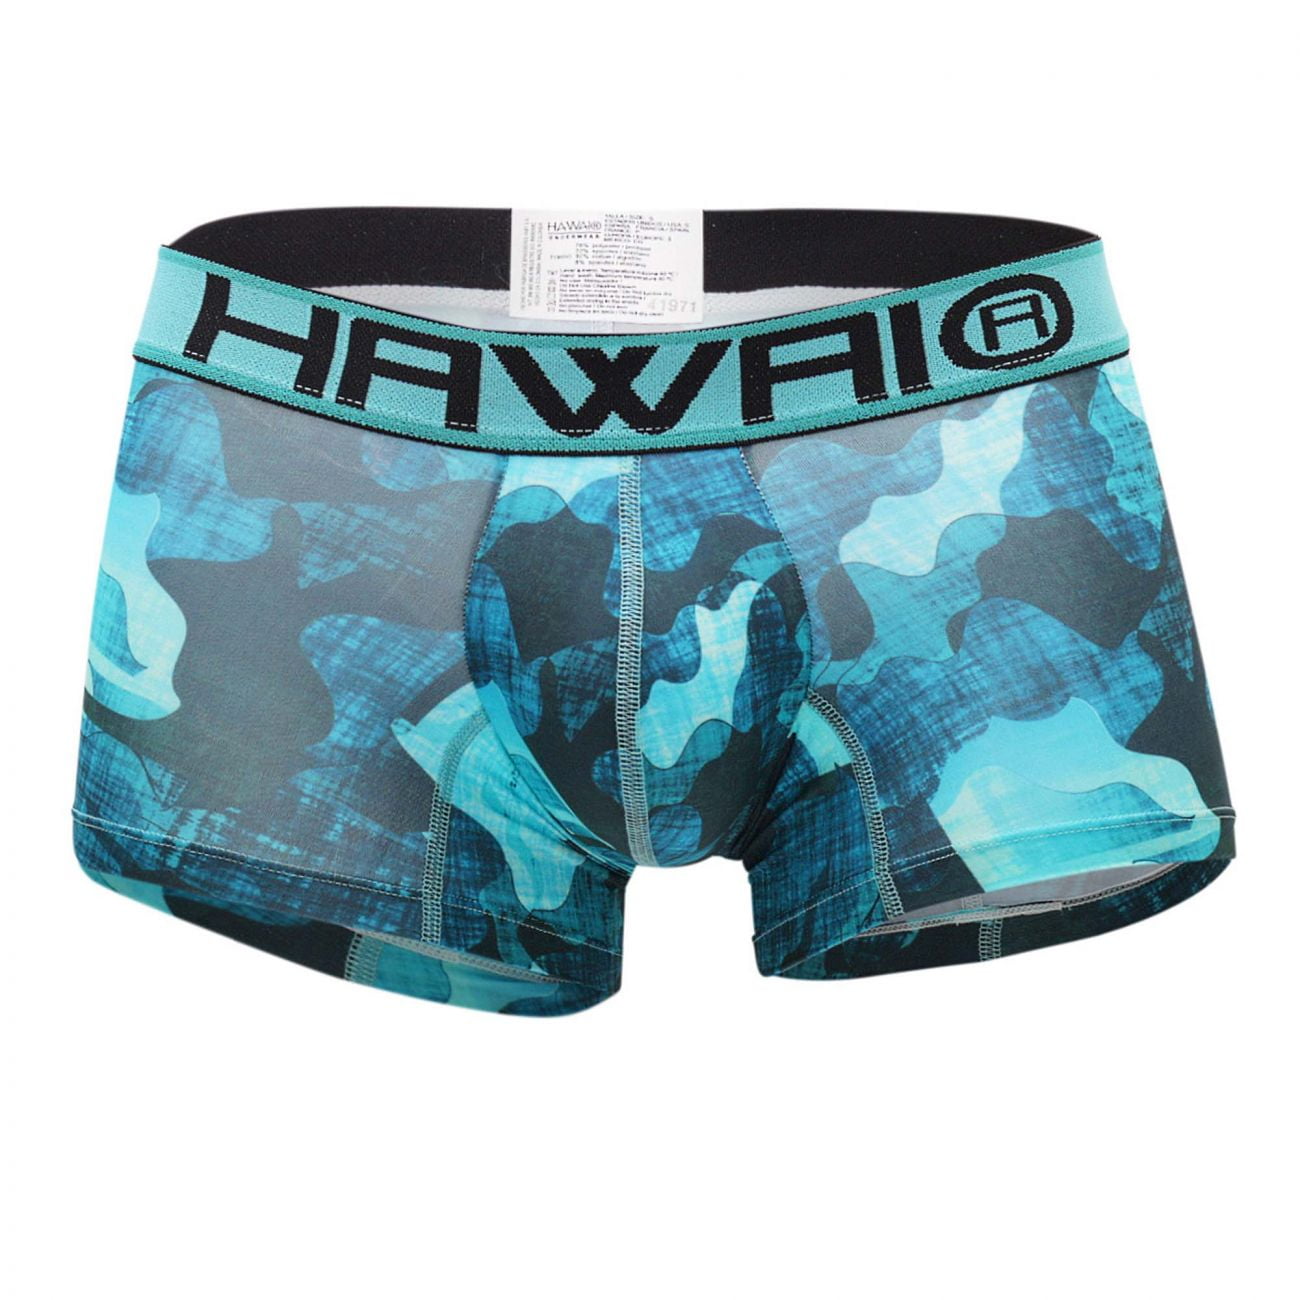 HAWAI Boxer Briefs Walmart.com